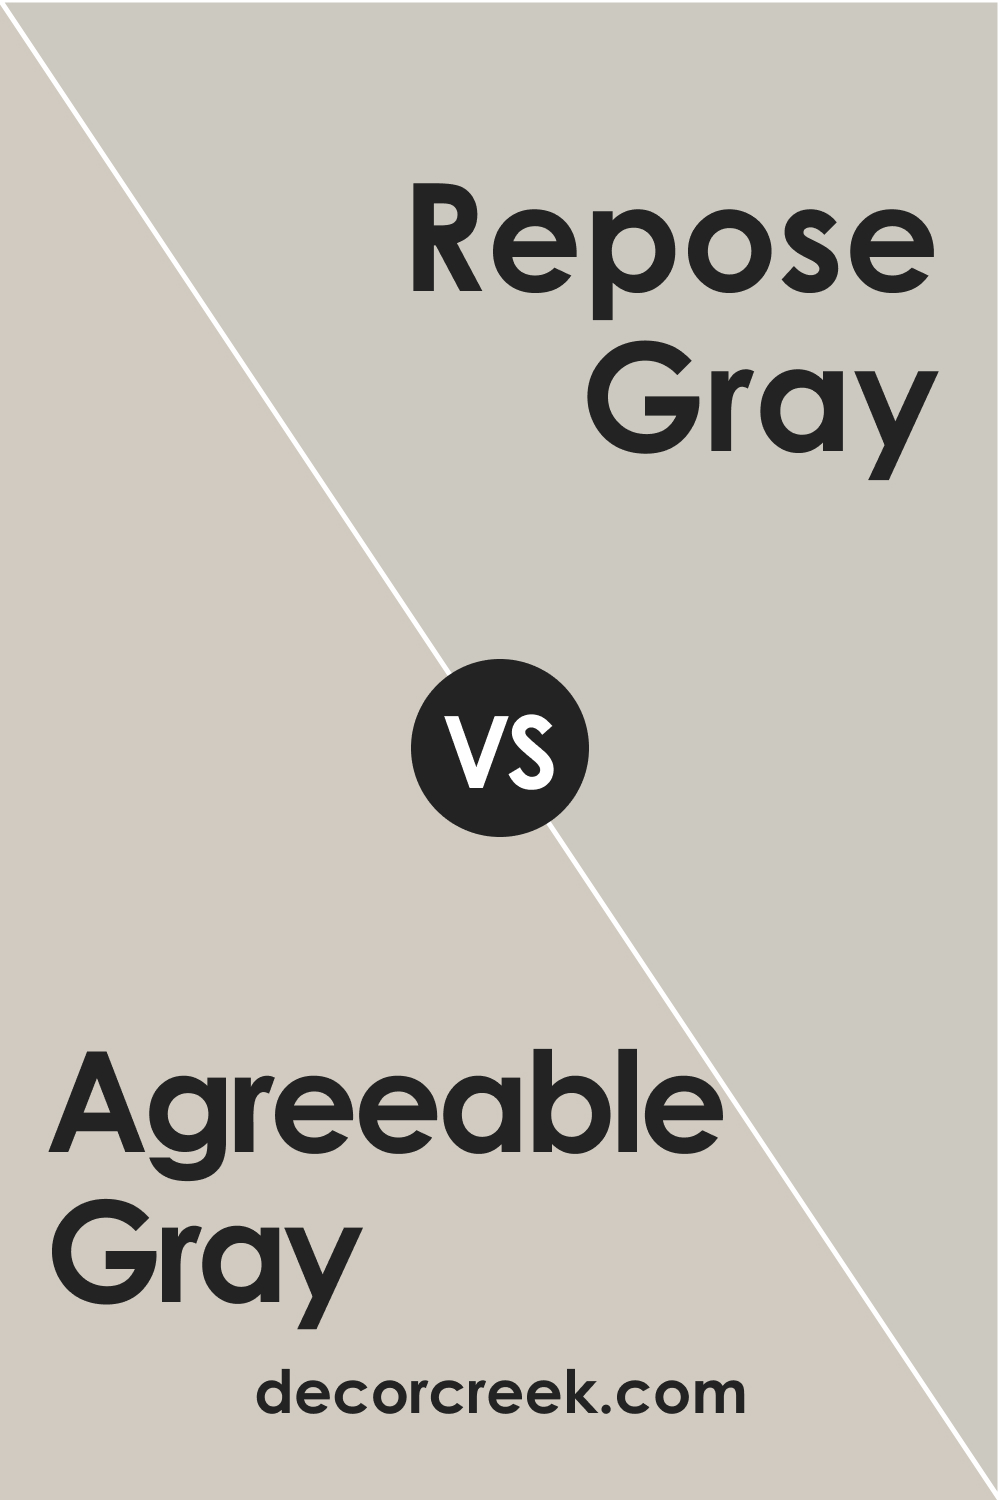 SW 7029 Agreeable Gray vs. SW 7015 Repose Gray